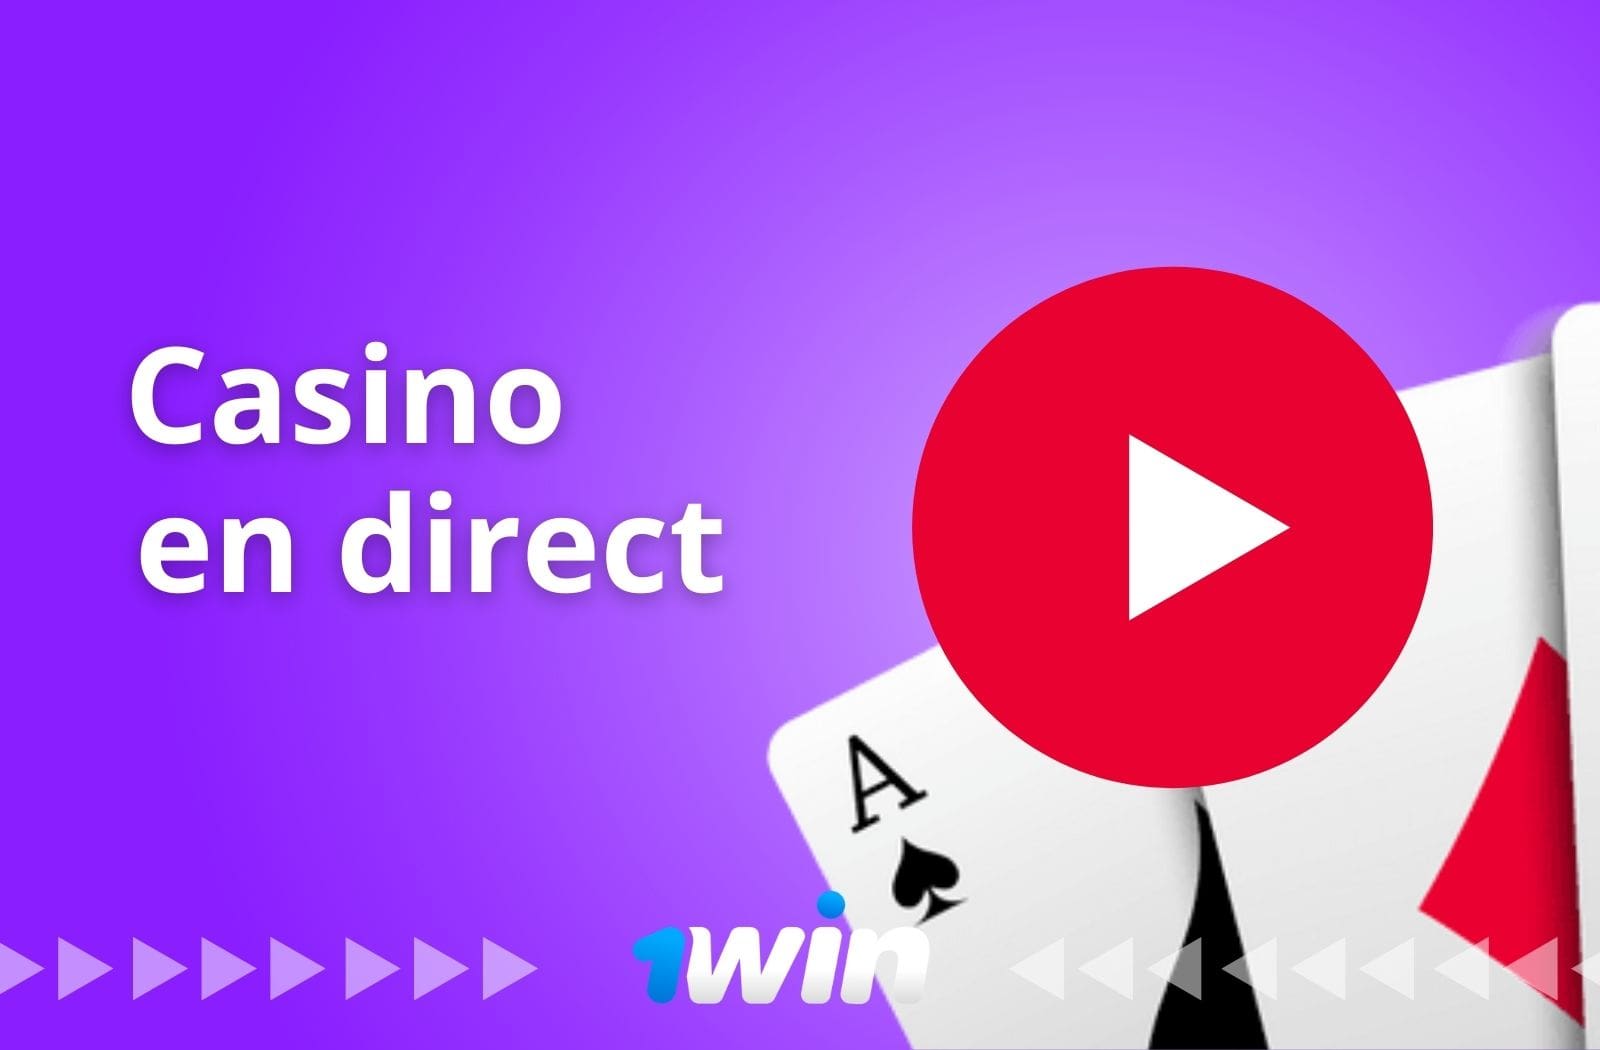 1win Bénin Casino en direct revue